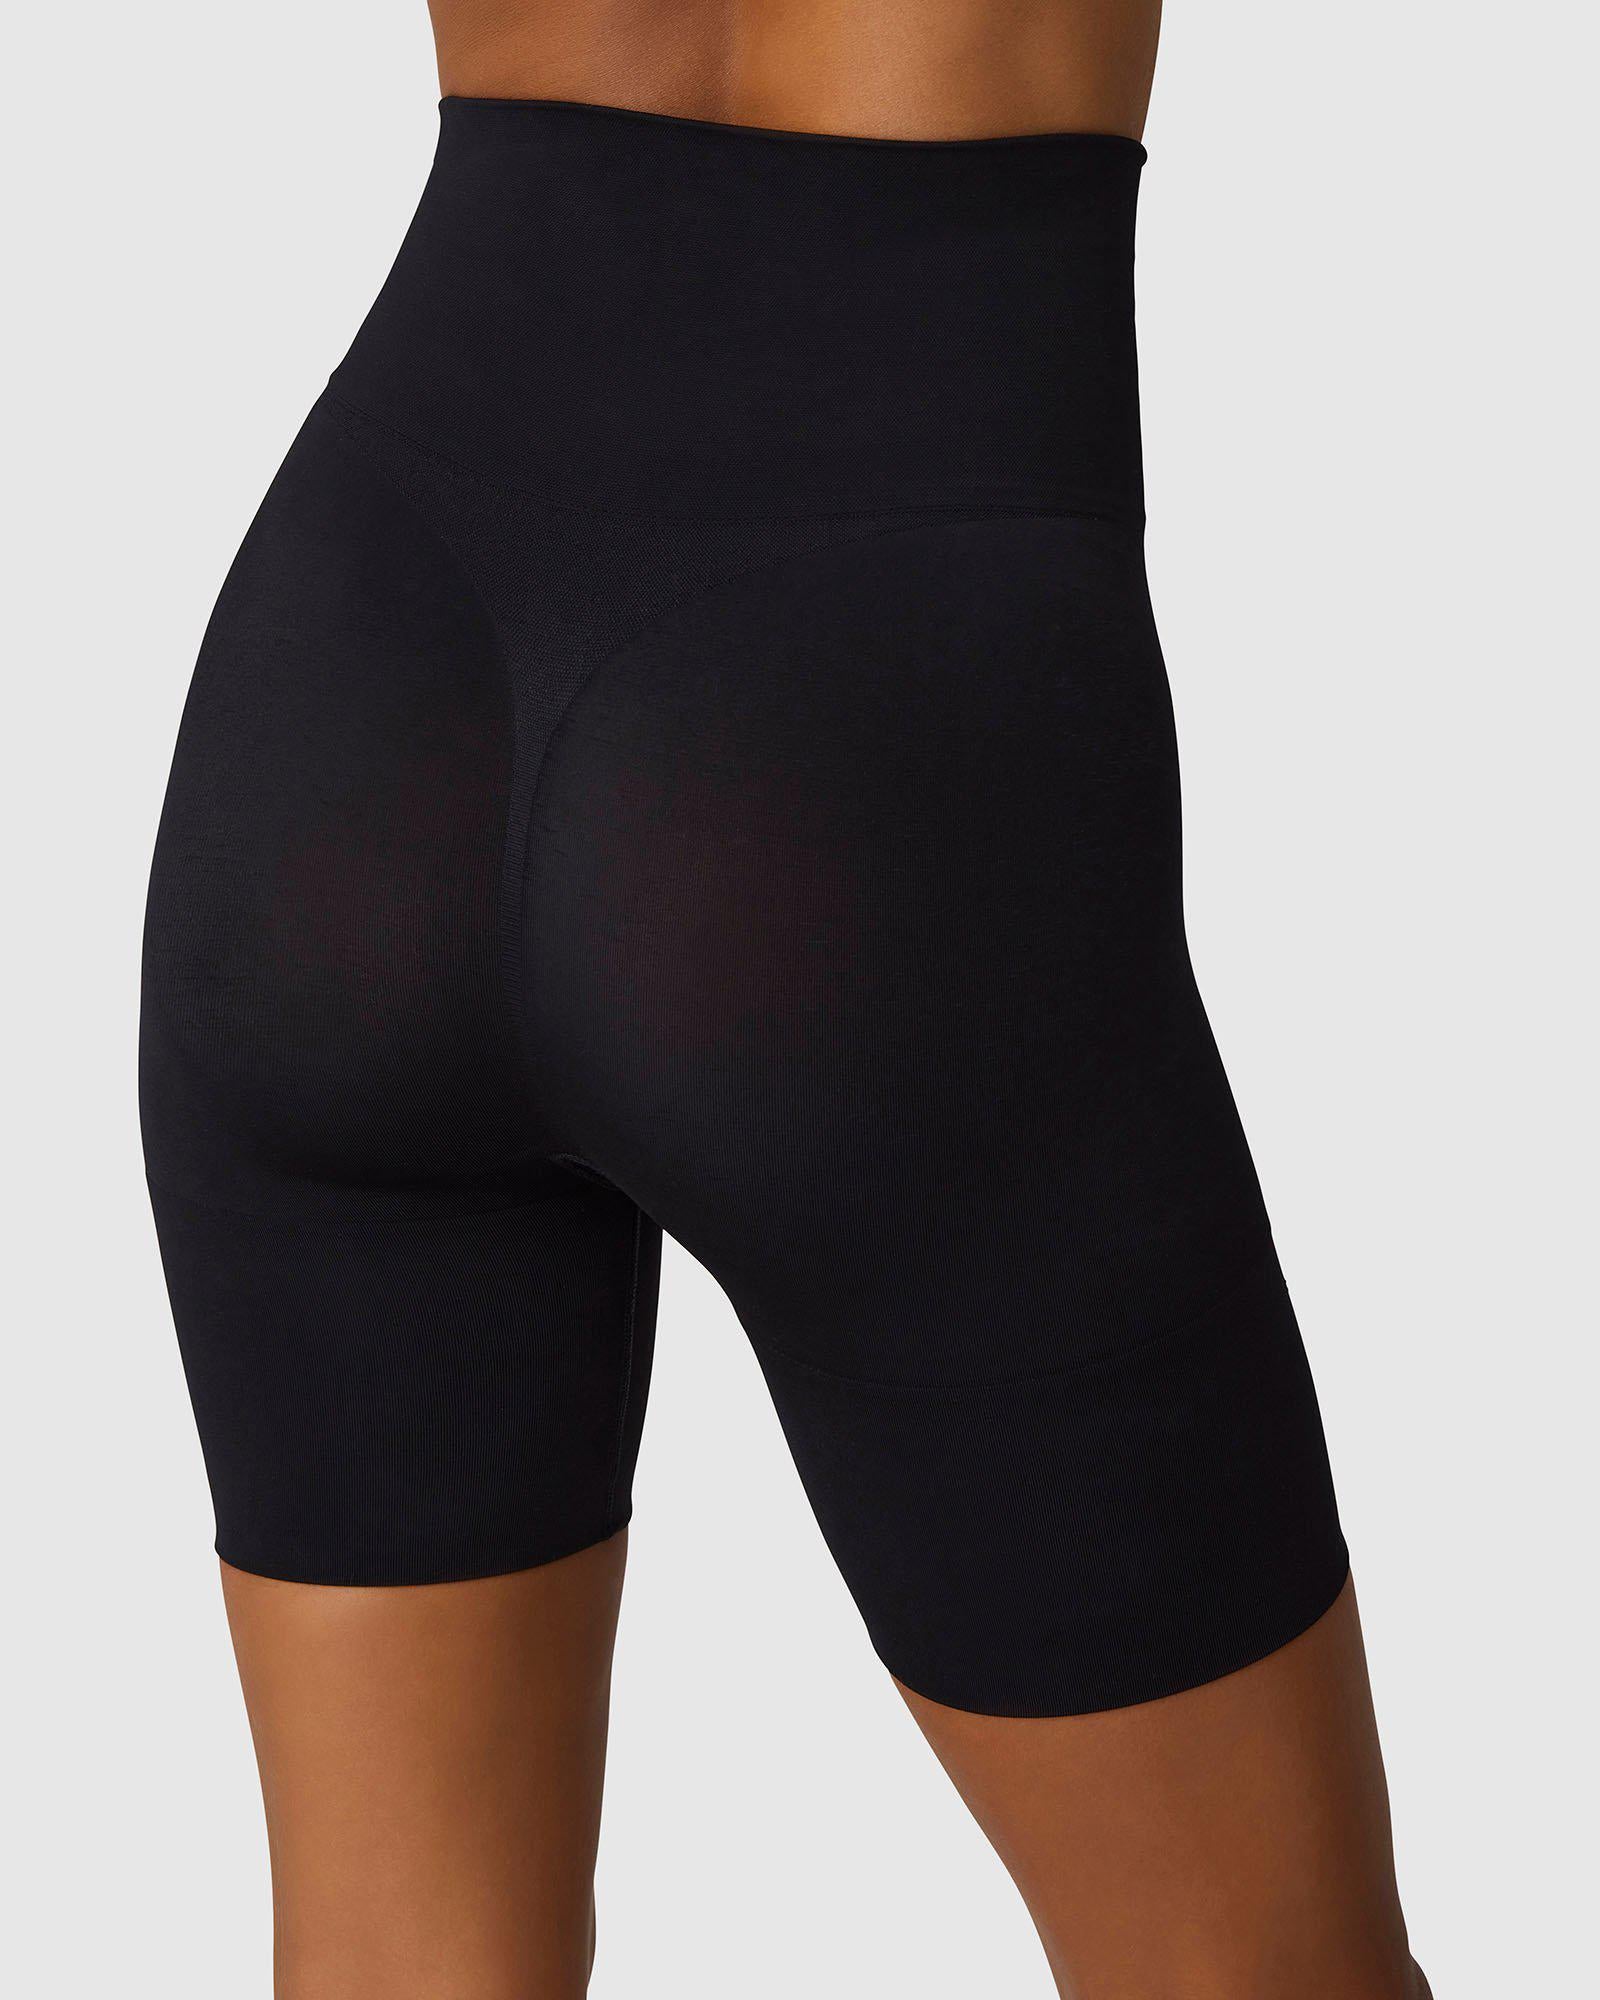 Livia Shaping Shorts Black  Buy now - Swedish Stockings